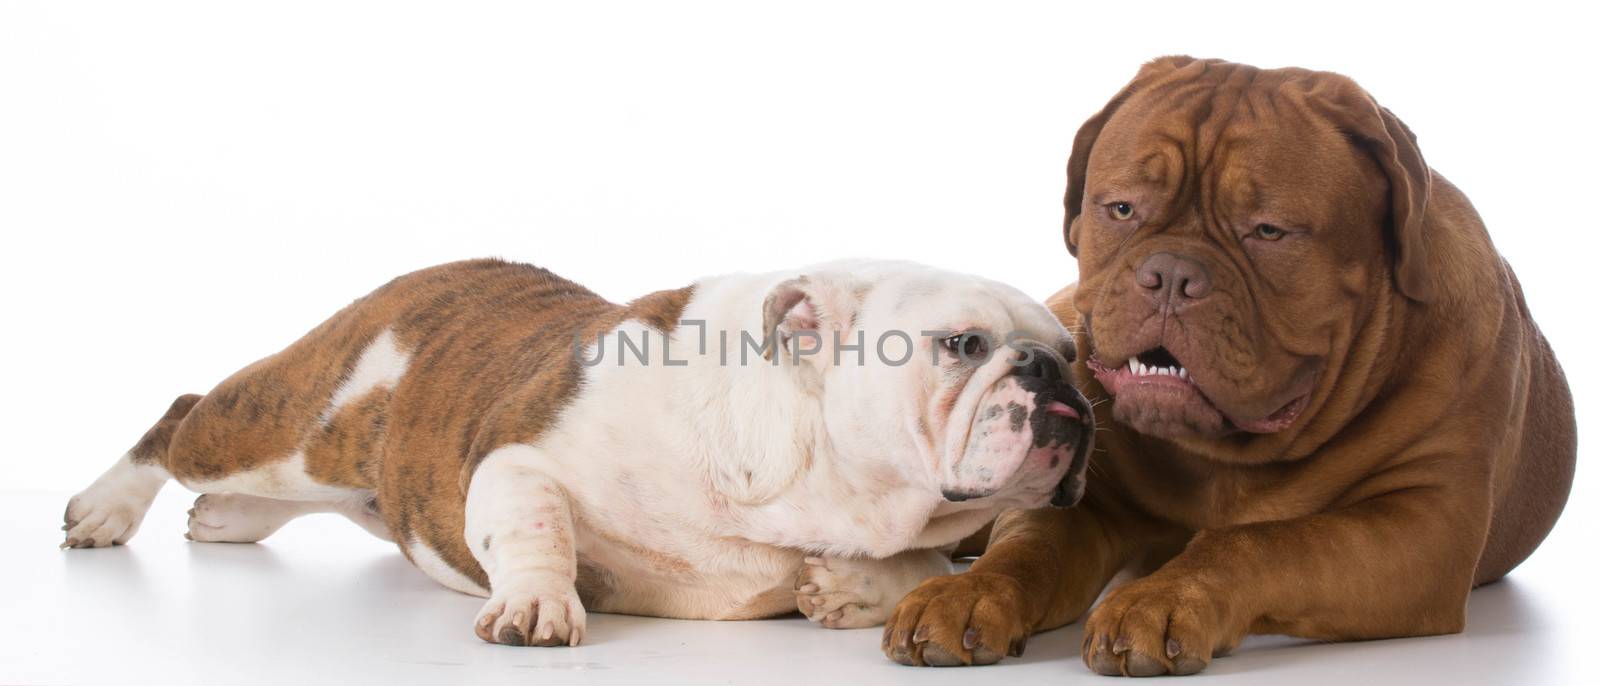 english bulldog and dogue de bordeaux on white background